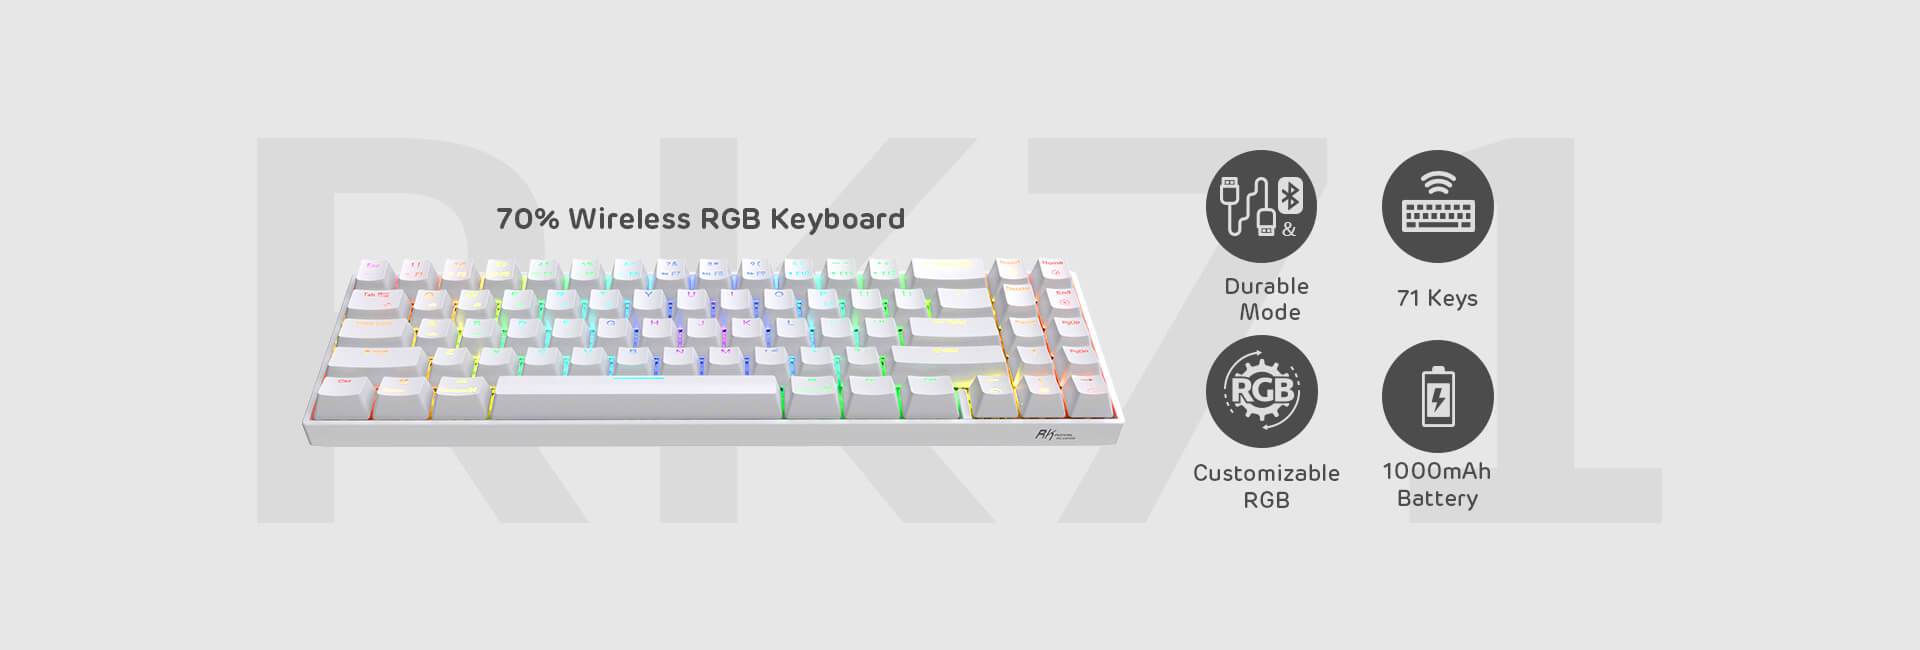 rk71_white_keyboard.jpg